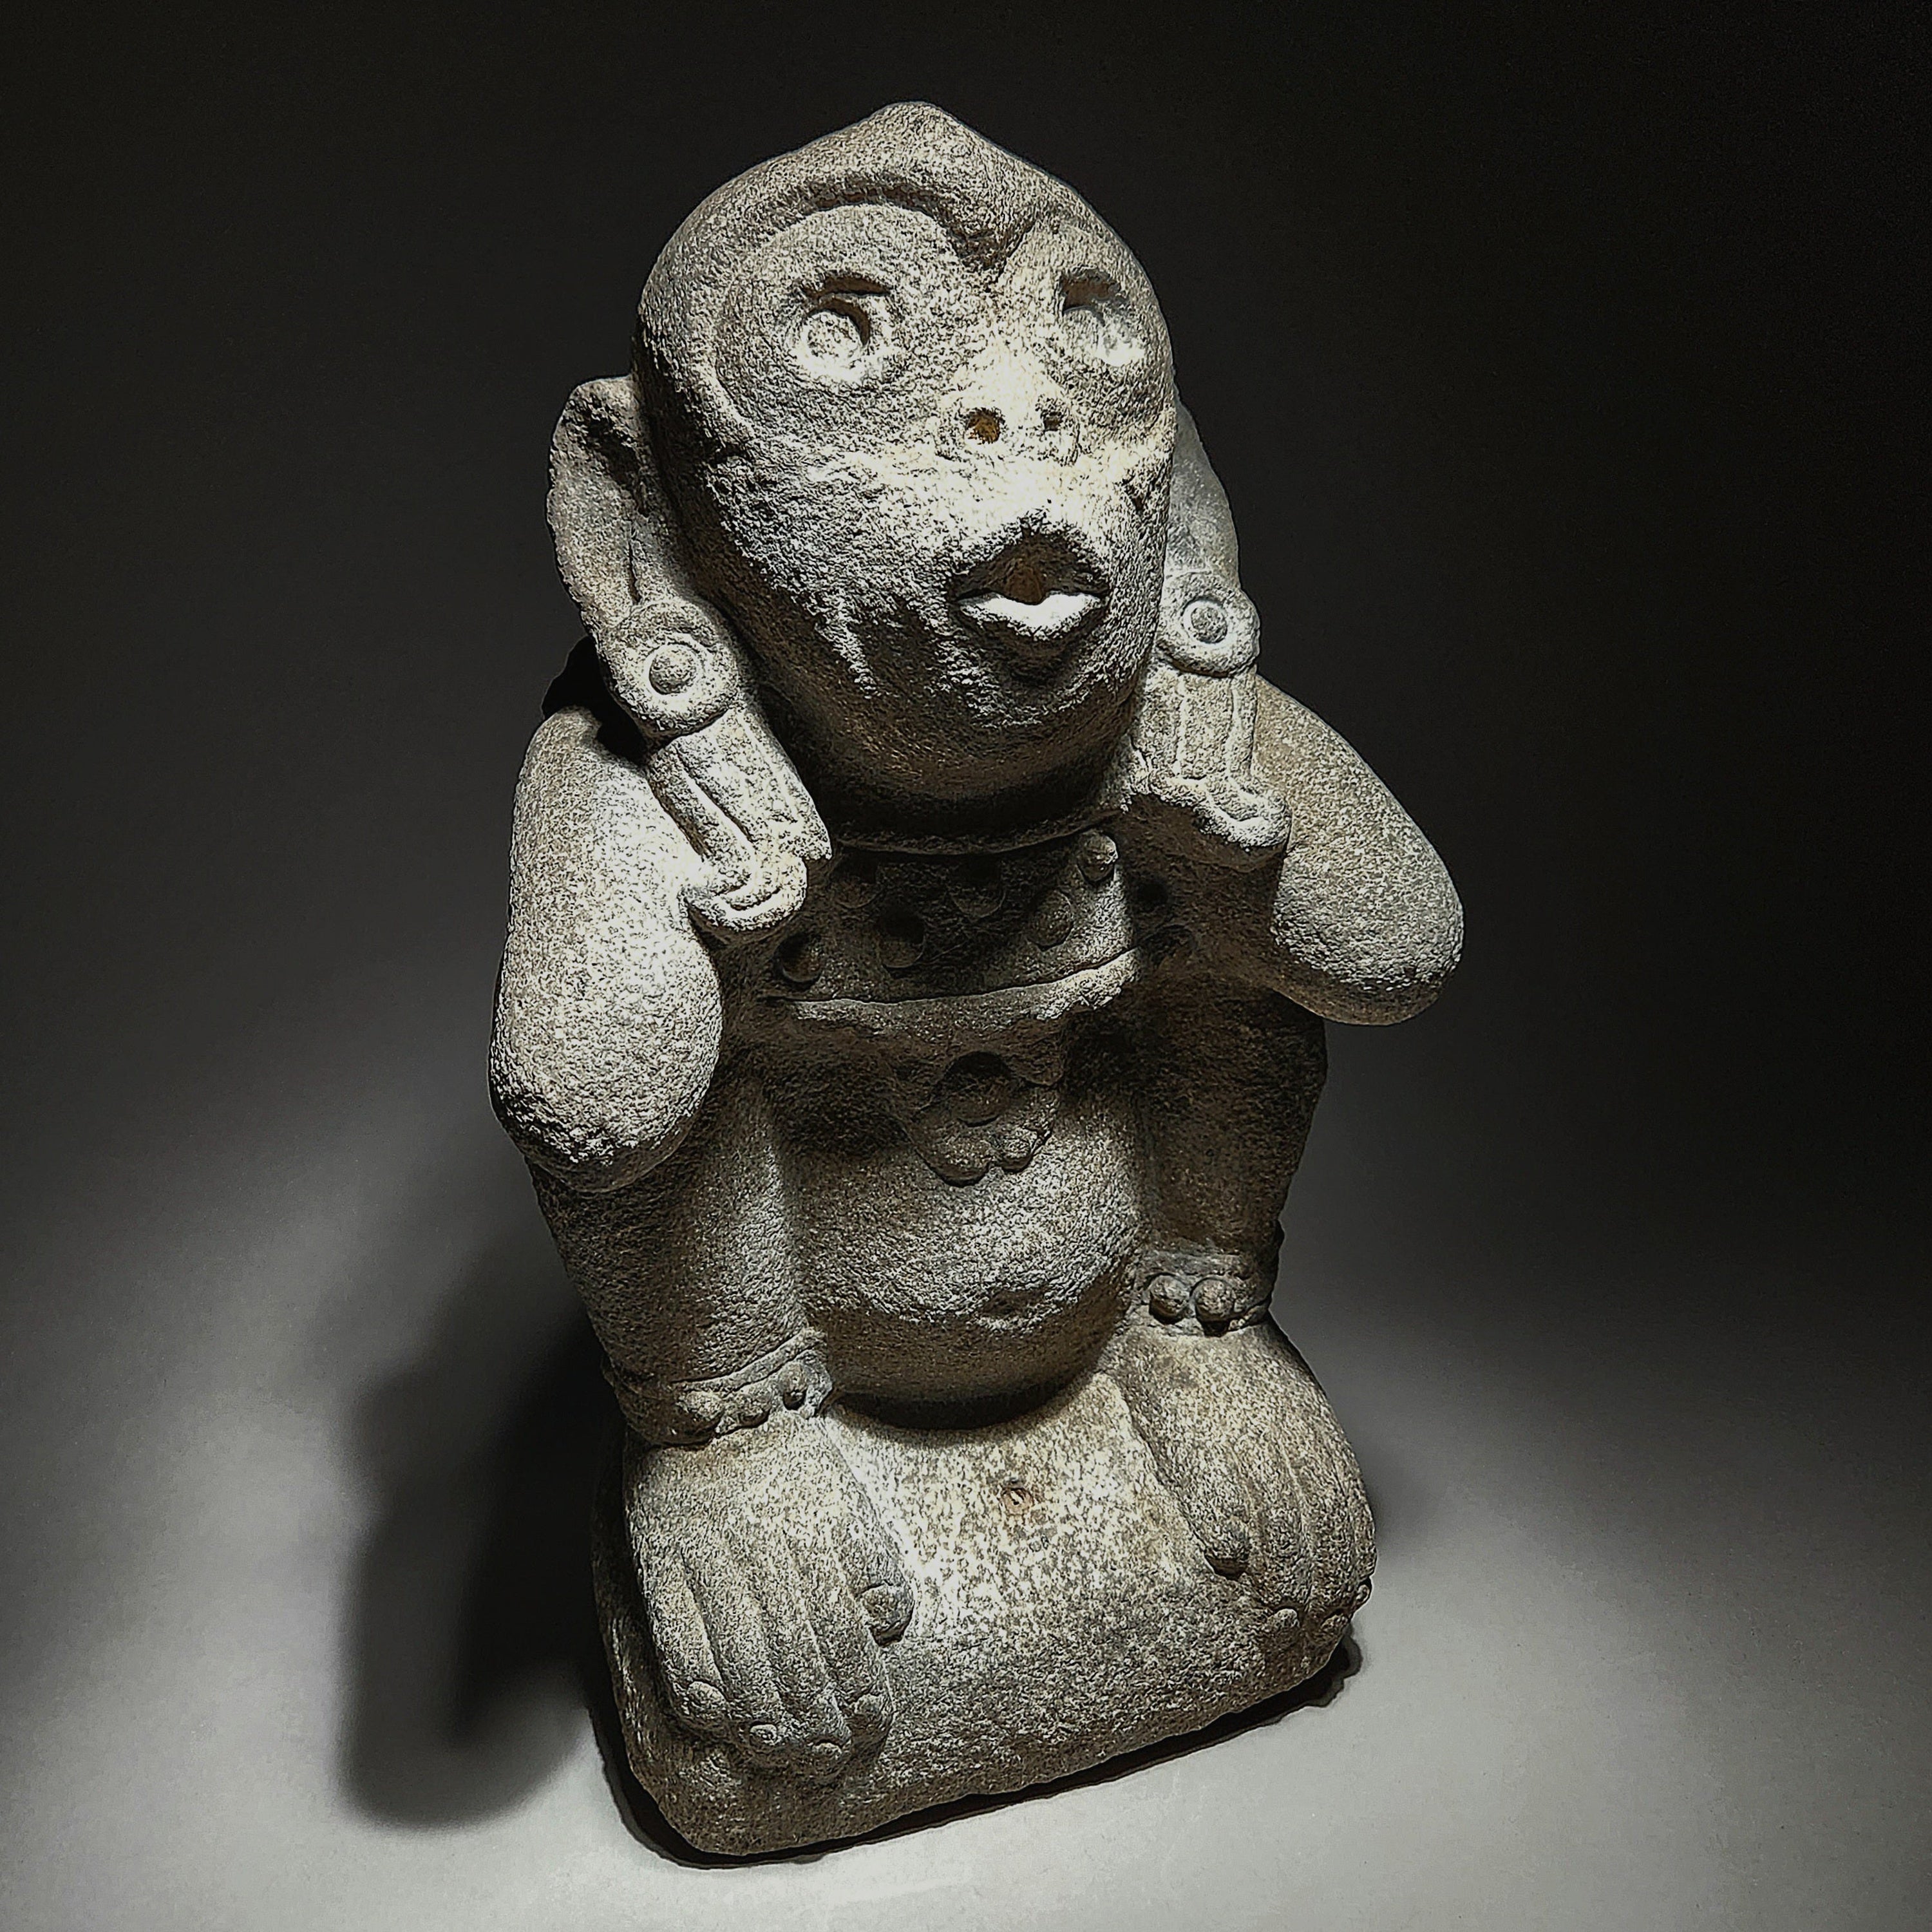 Aztec Sculpture of a Spider Monkey with Pre-1970 UNESCO-Compliant Provenance